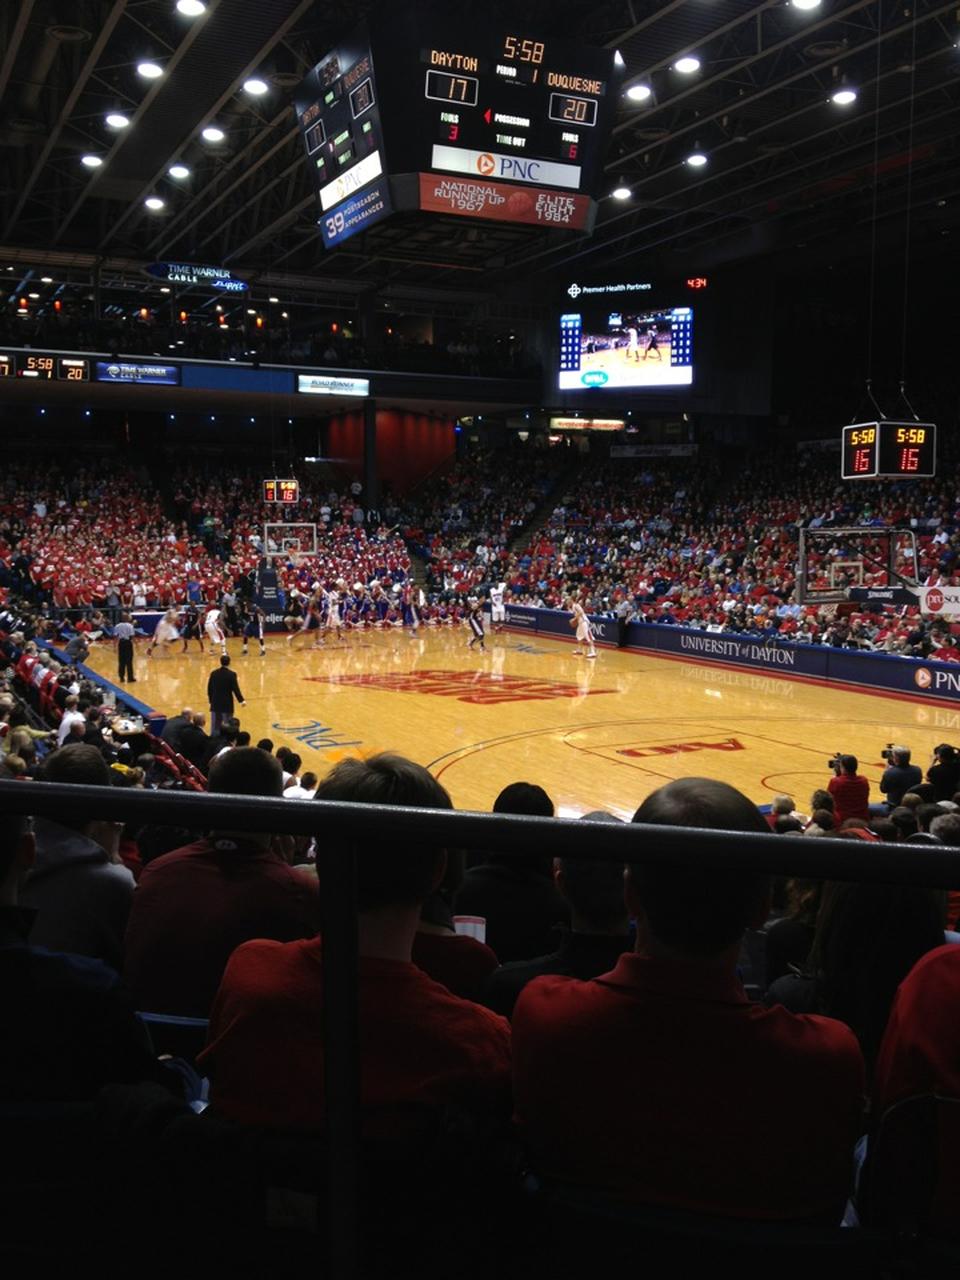 Section 203 at University of Dayton Arena